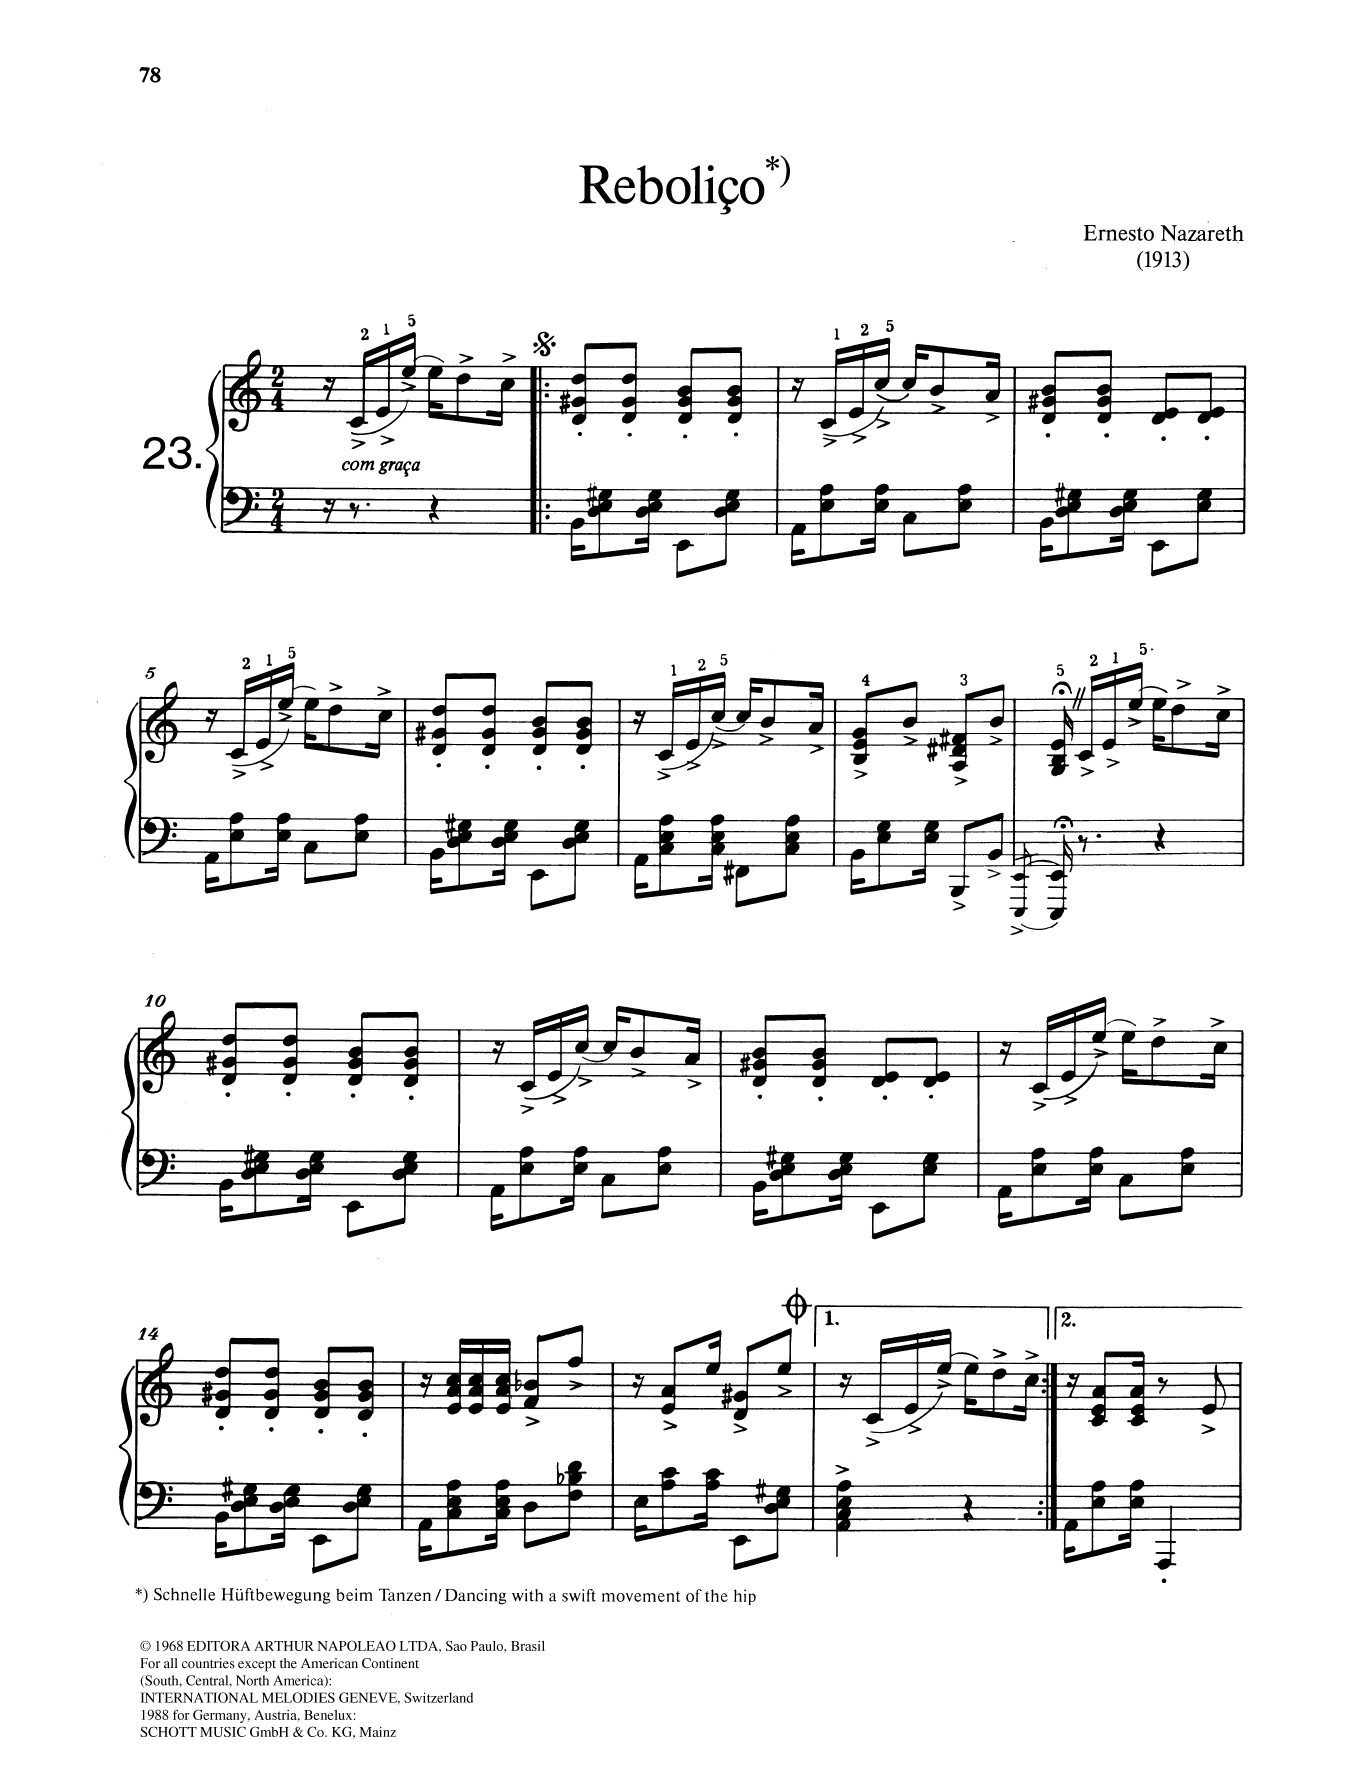 Ernesto Nazareth Reboliço Sheet Music Notes & Chords for Piano Solo - Download or Print PDF